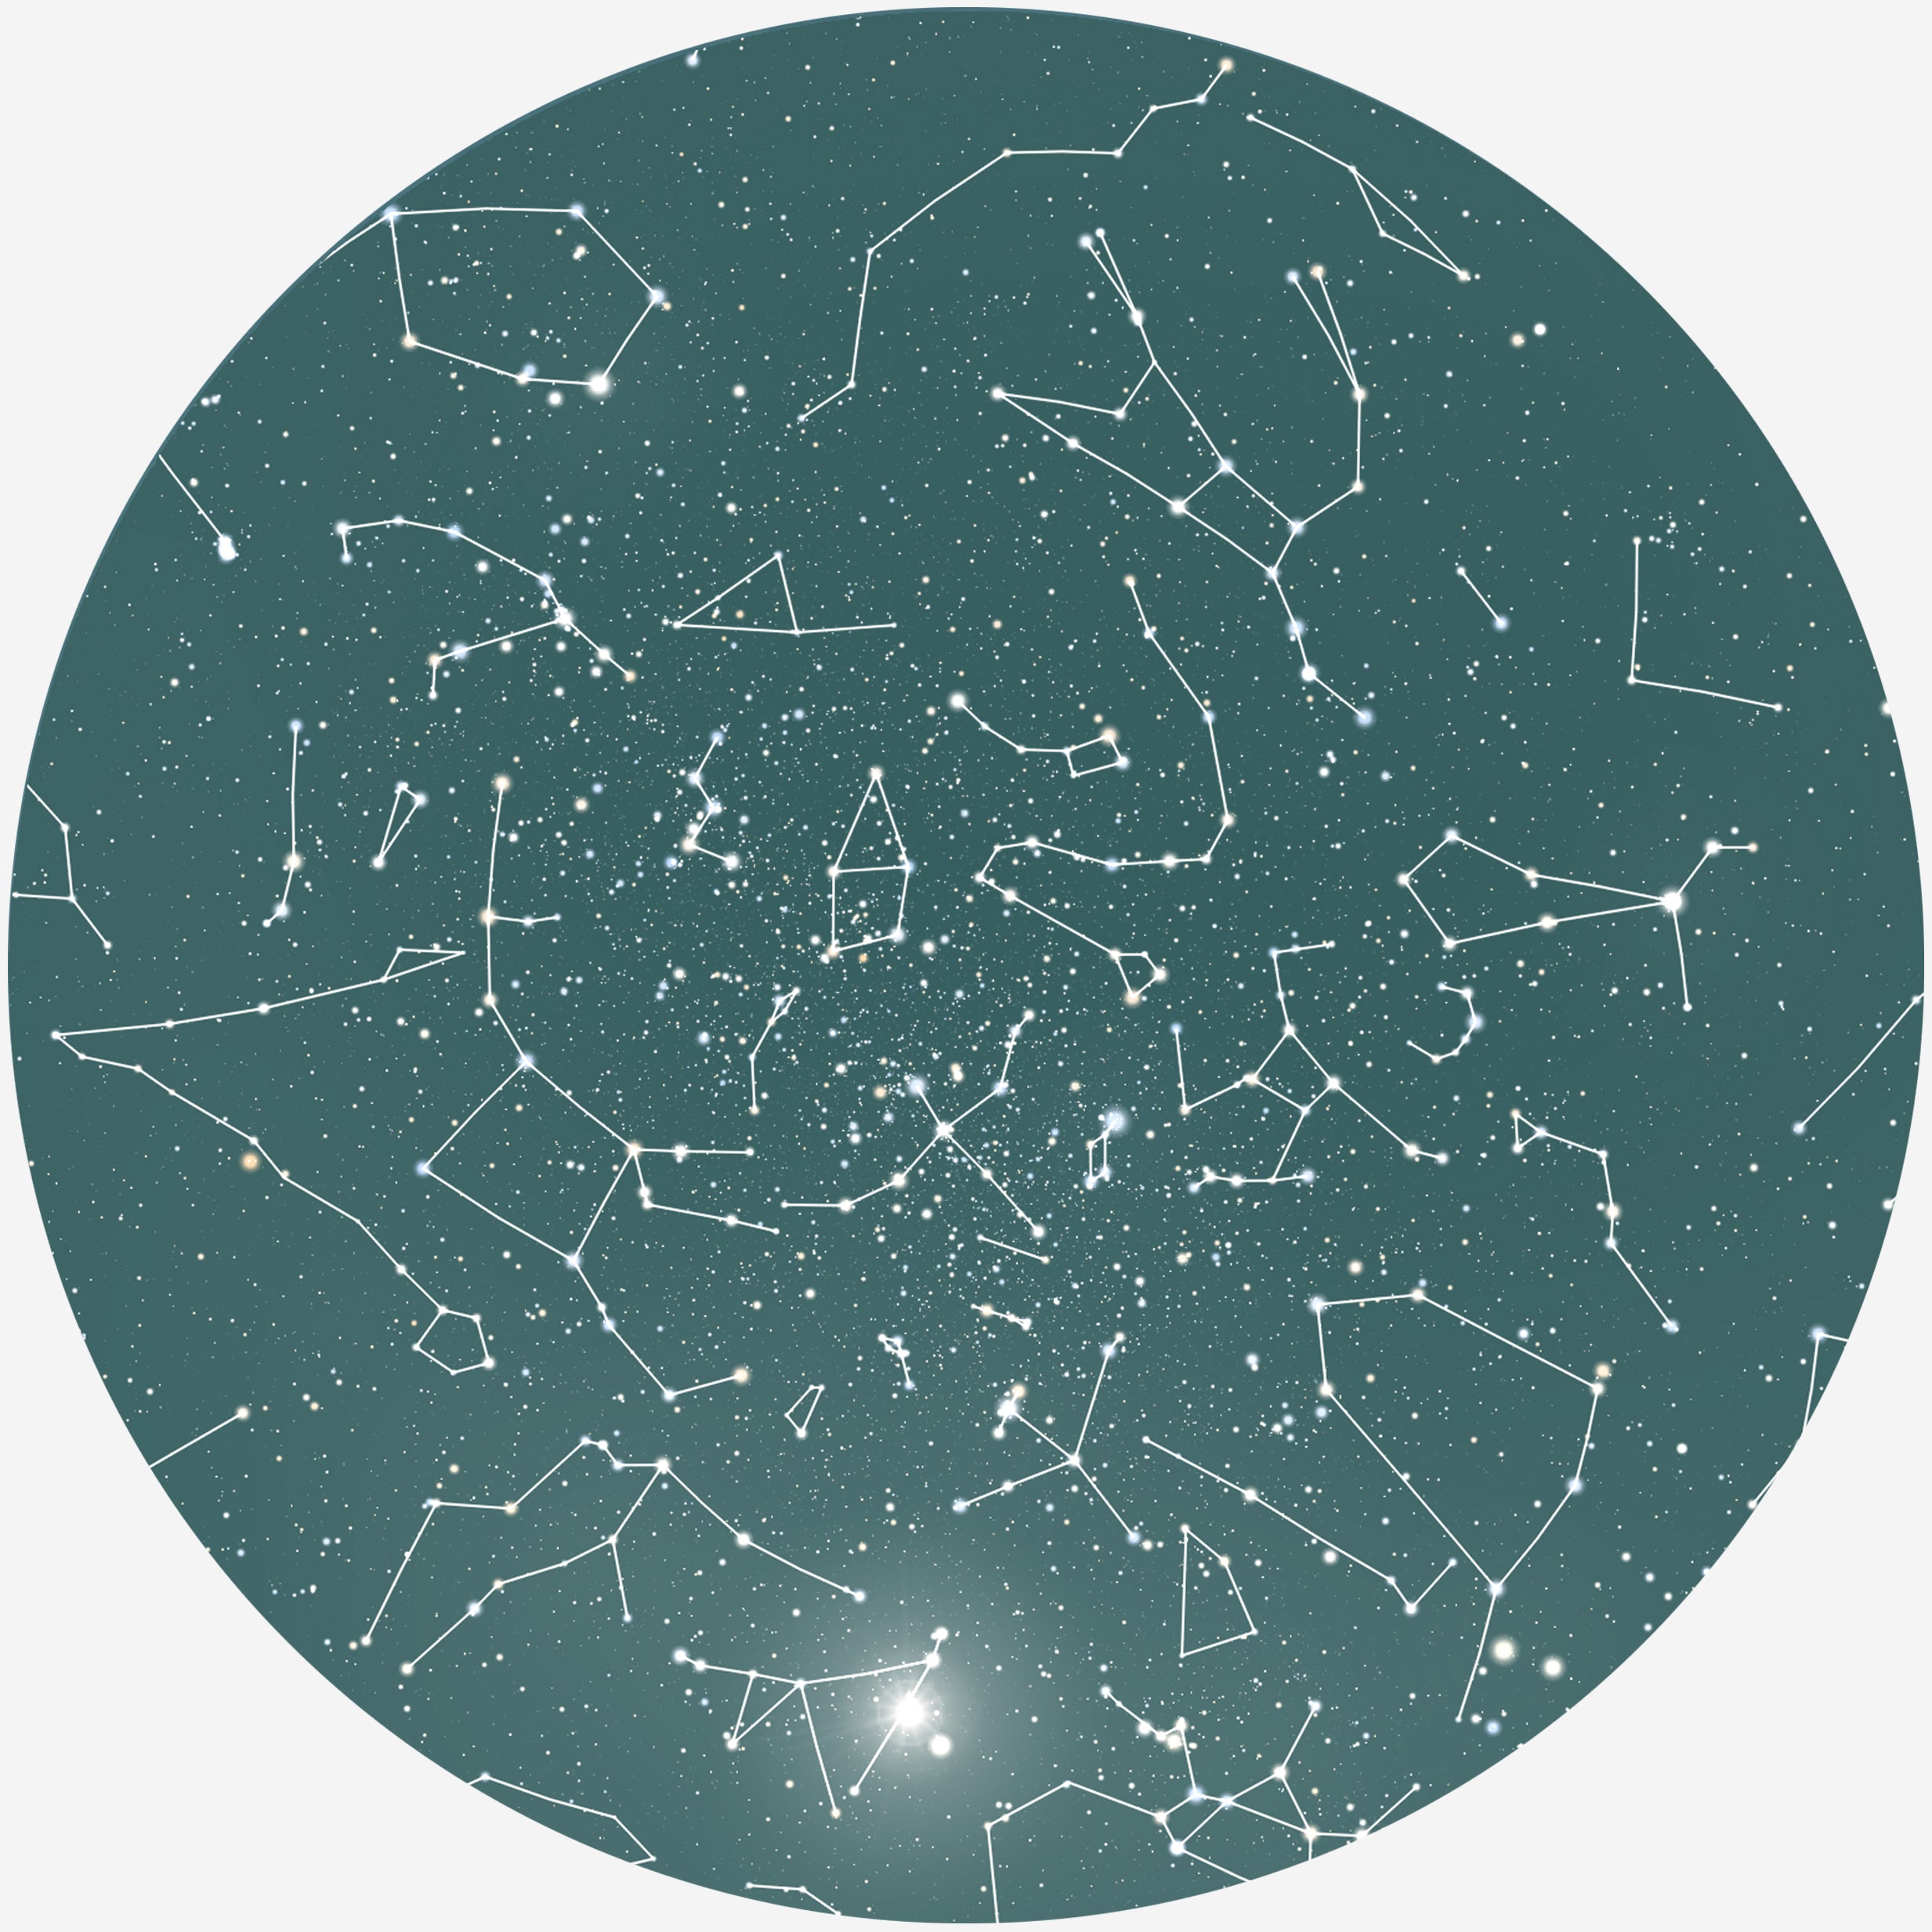 Se RUND PLAKAT MED PERSONLIG STJERNEHIMMEL (MØRKEGRØN) - 20 cm / Stjernehimmel med stjernebilleder hos KISPUS